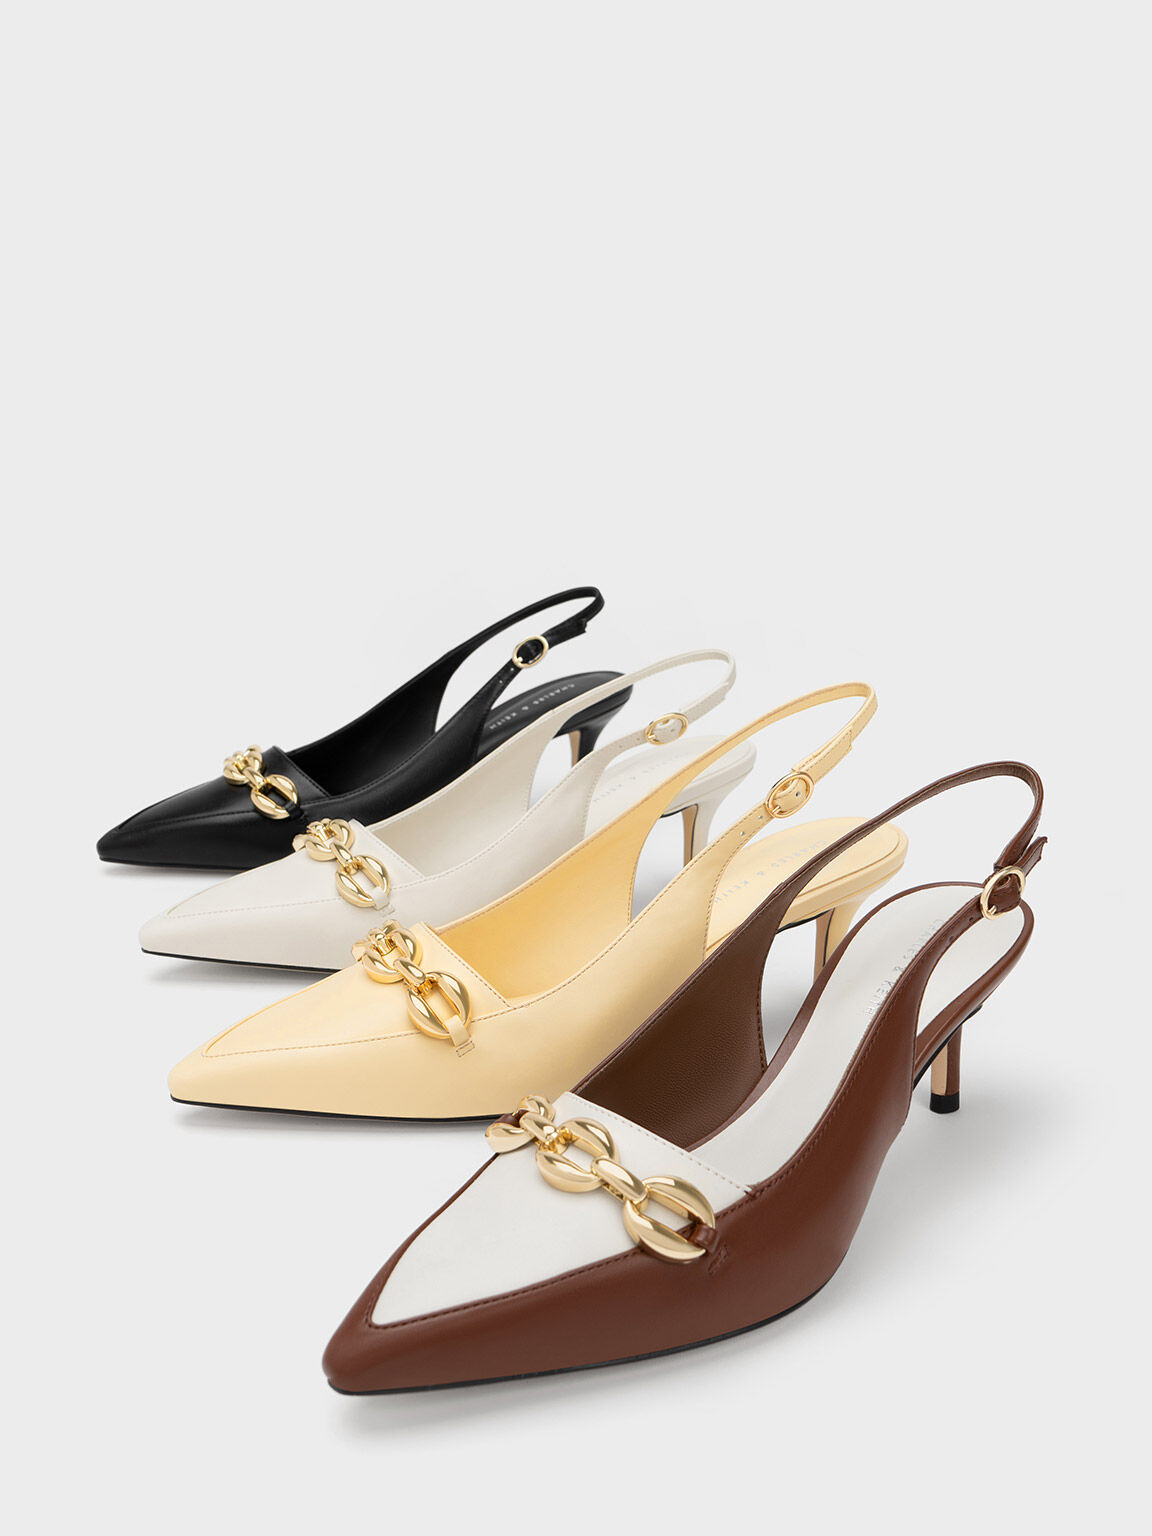 Janiett Women's Light Yellow Block Heel Shoes | Aldo Shoes